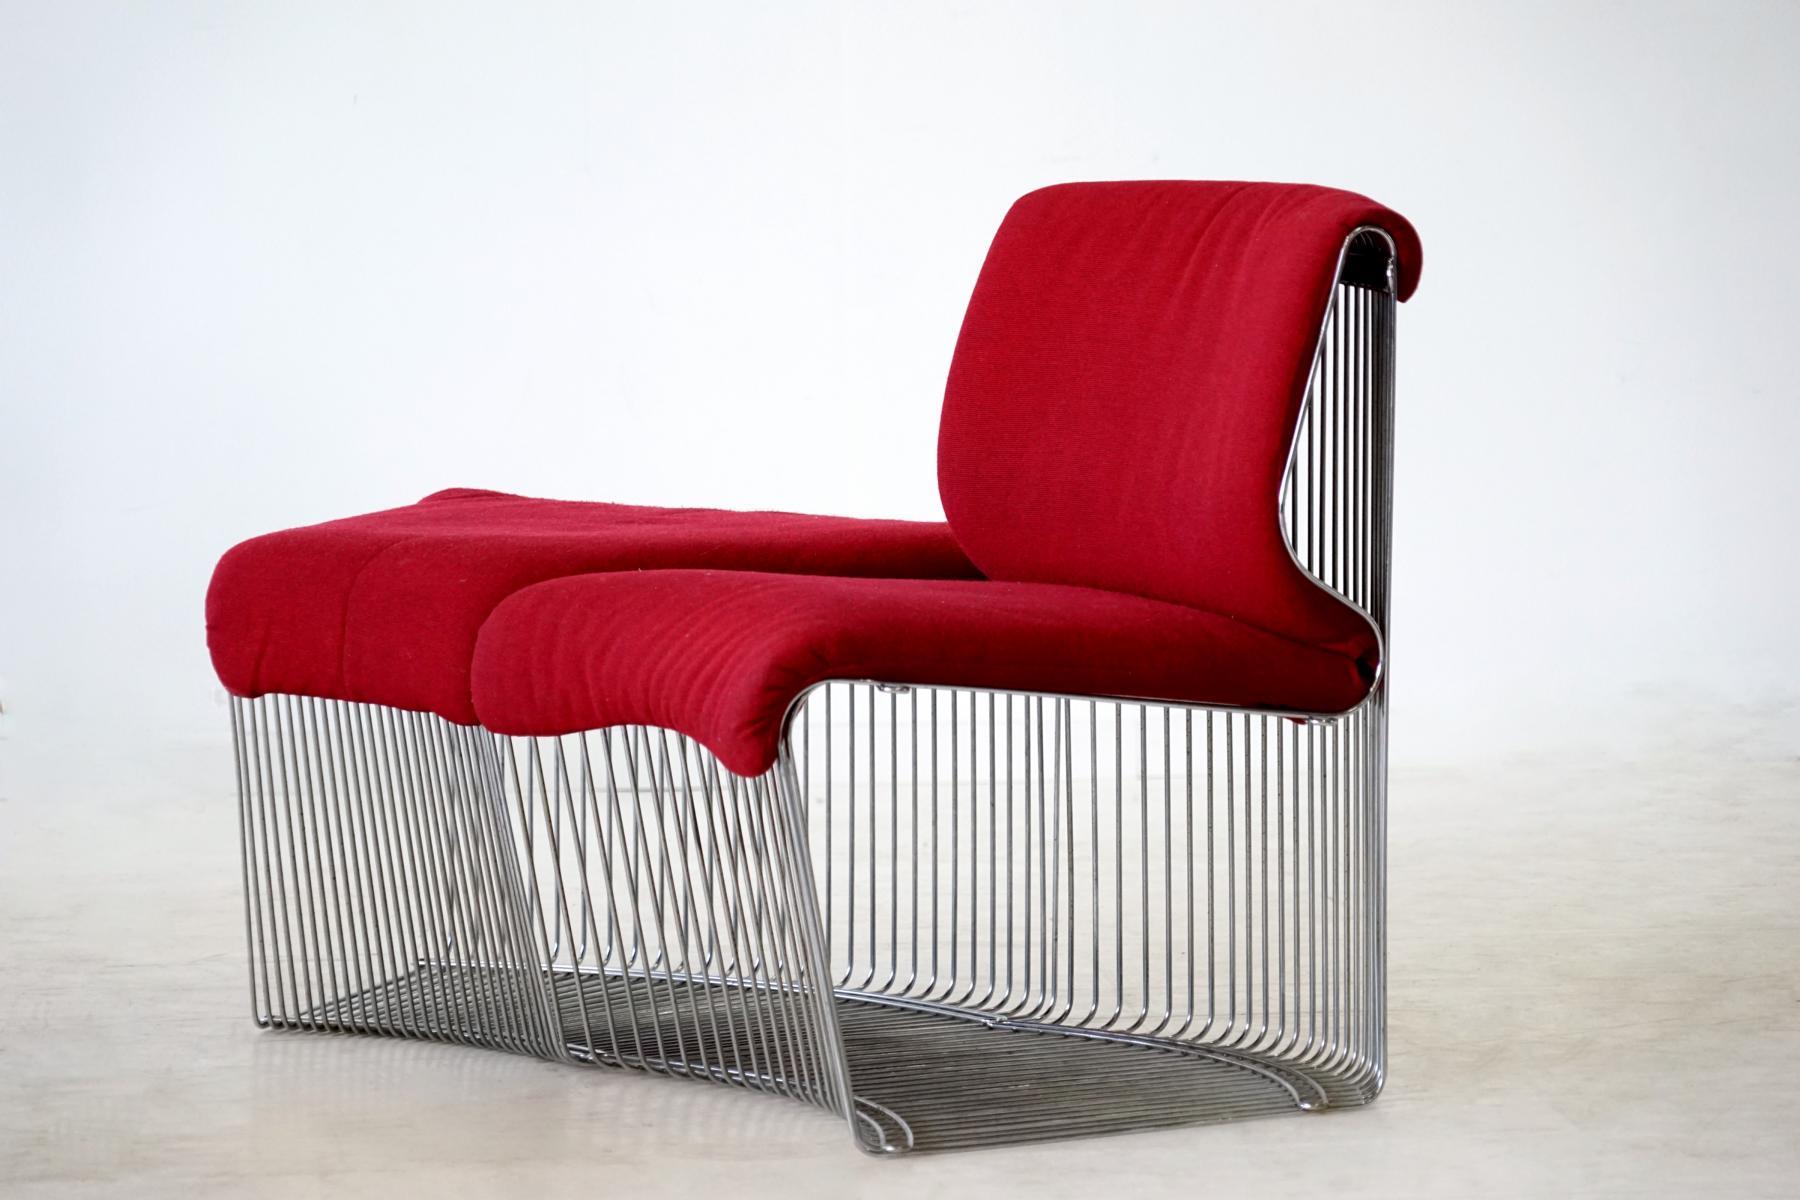 Pantonova Fritz Hansen Verner Panton chair sofa modules original fabric

